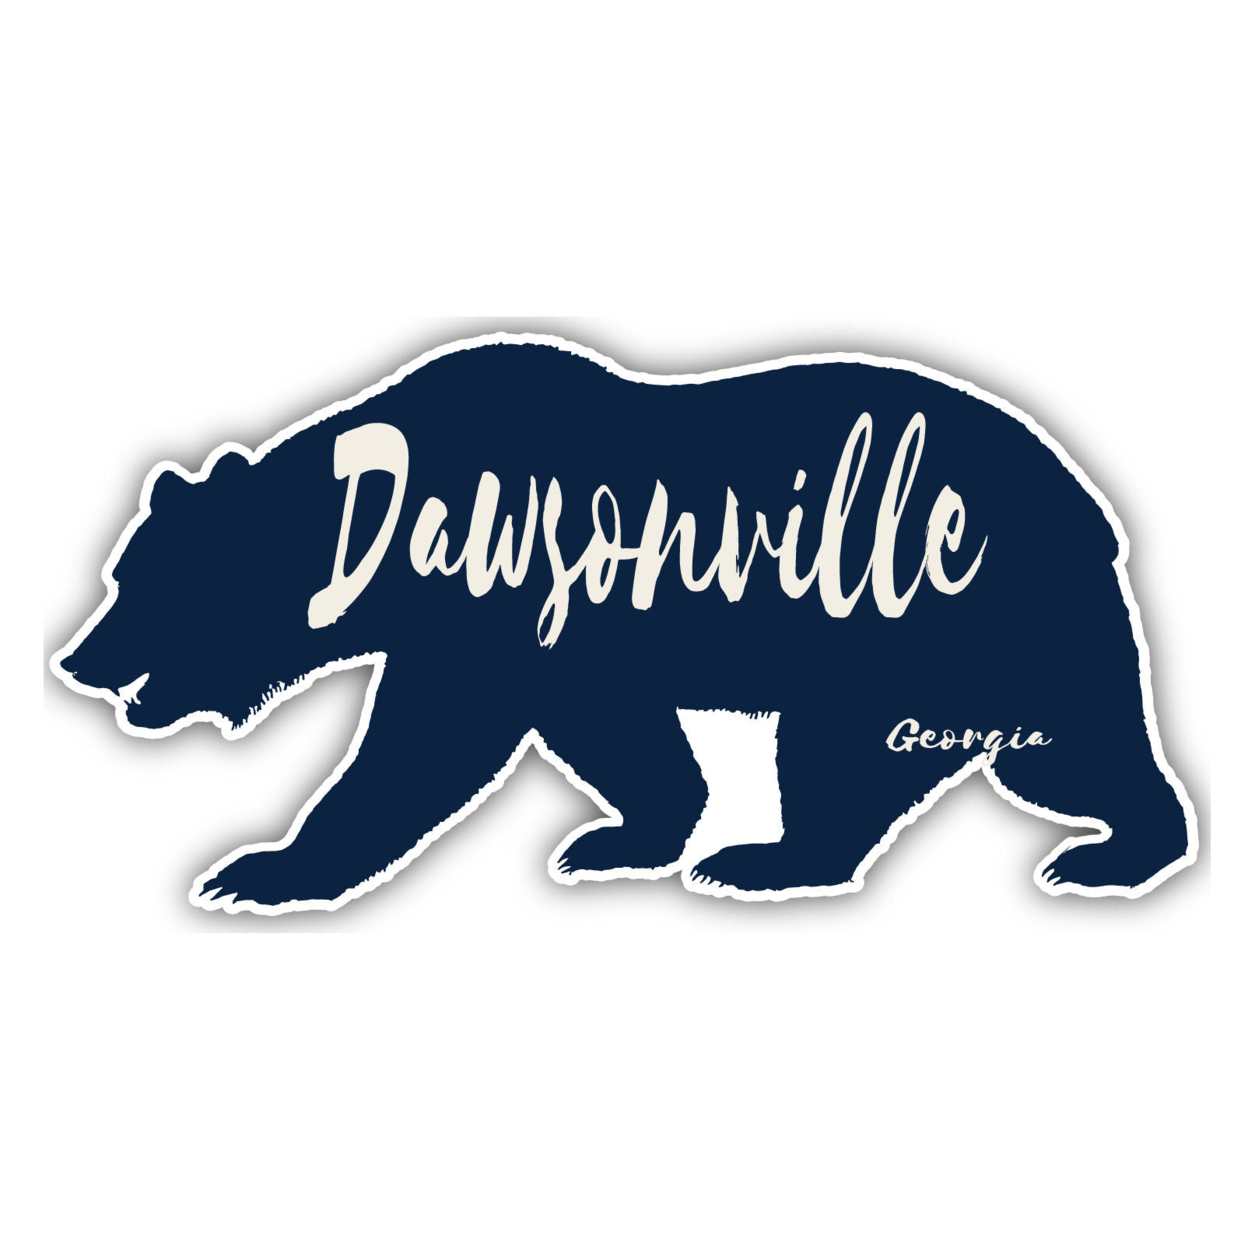 Dawsonville Georgia Souvenir Decorative Stickers (Choose Theme And Size) - Single Unit, 8-Inch, Great Outdoors